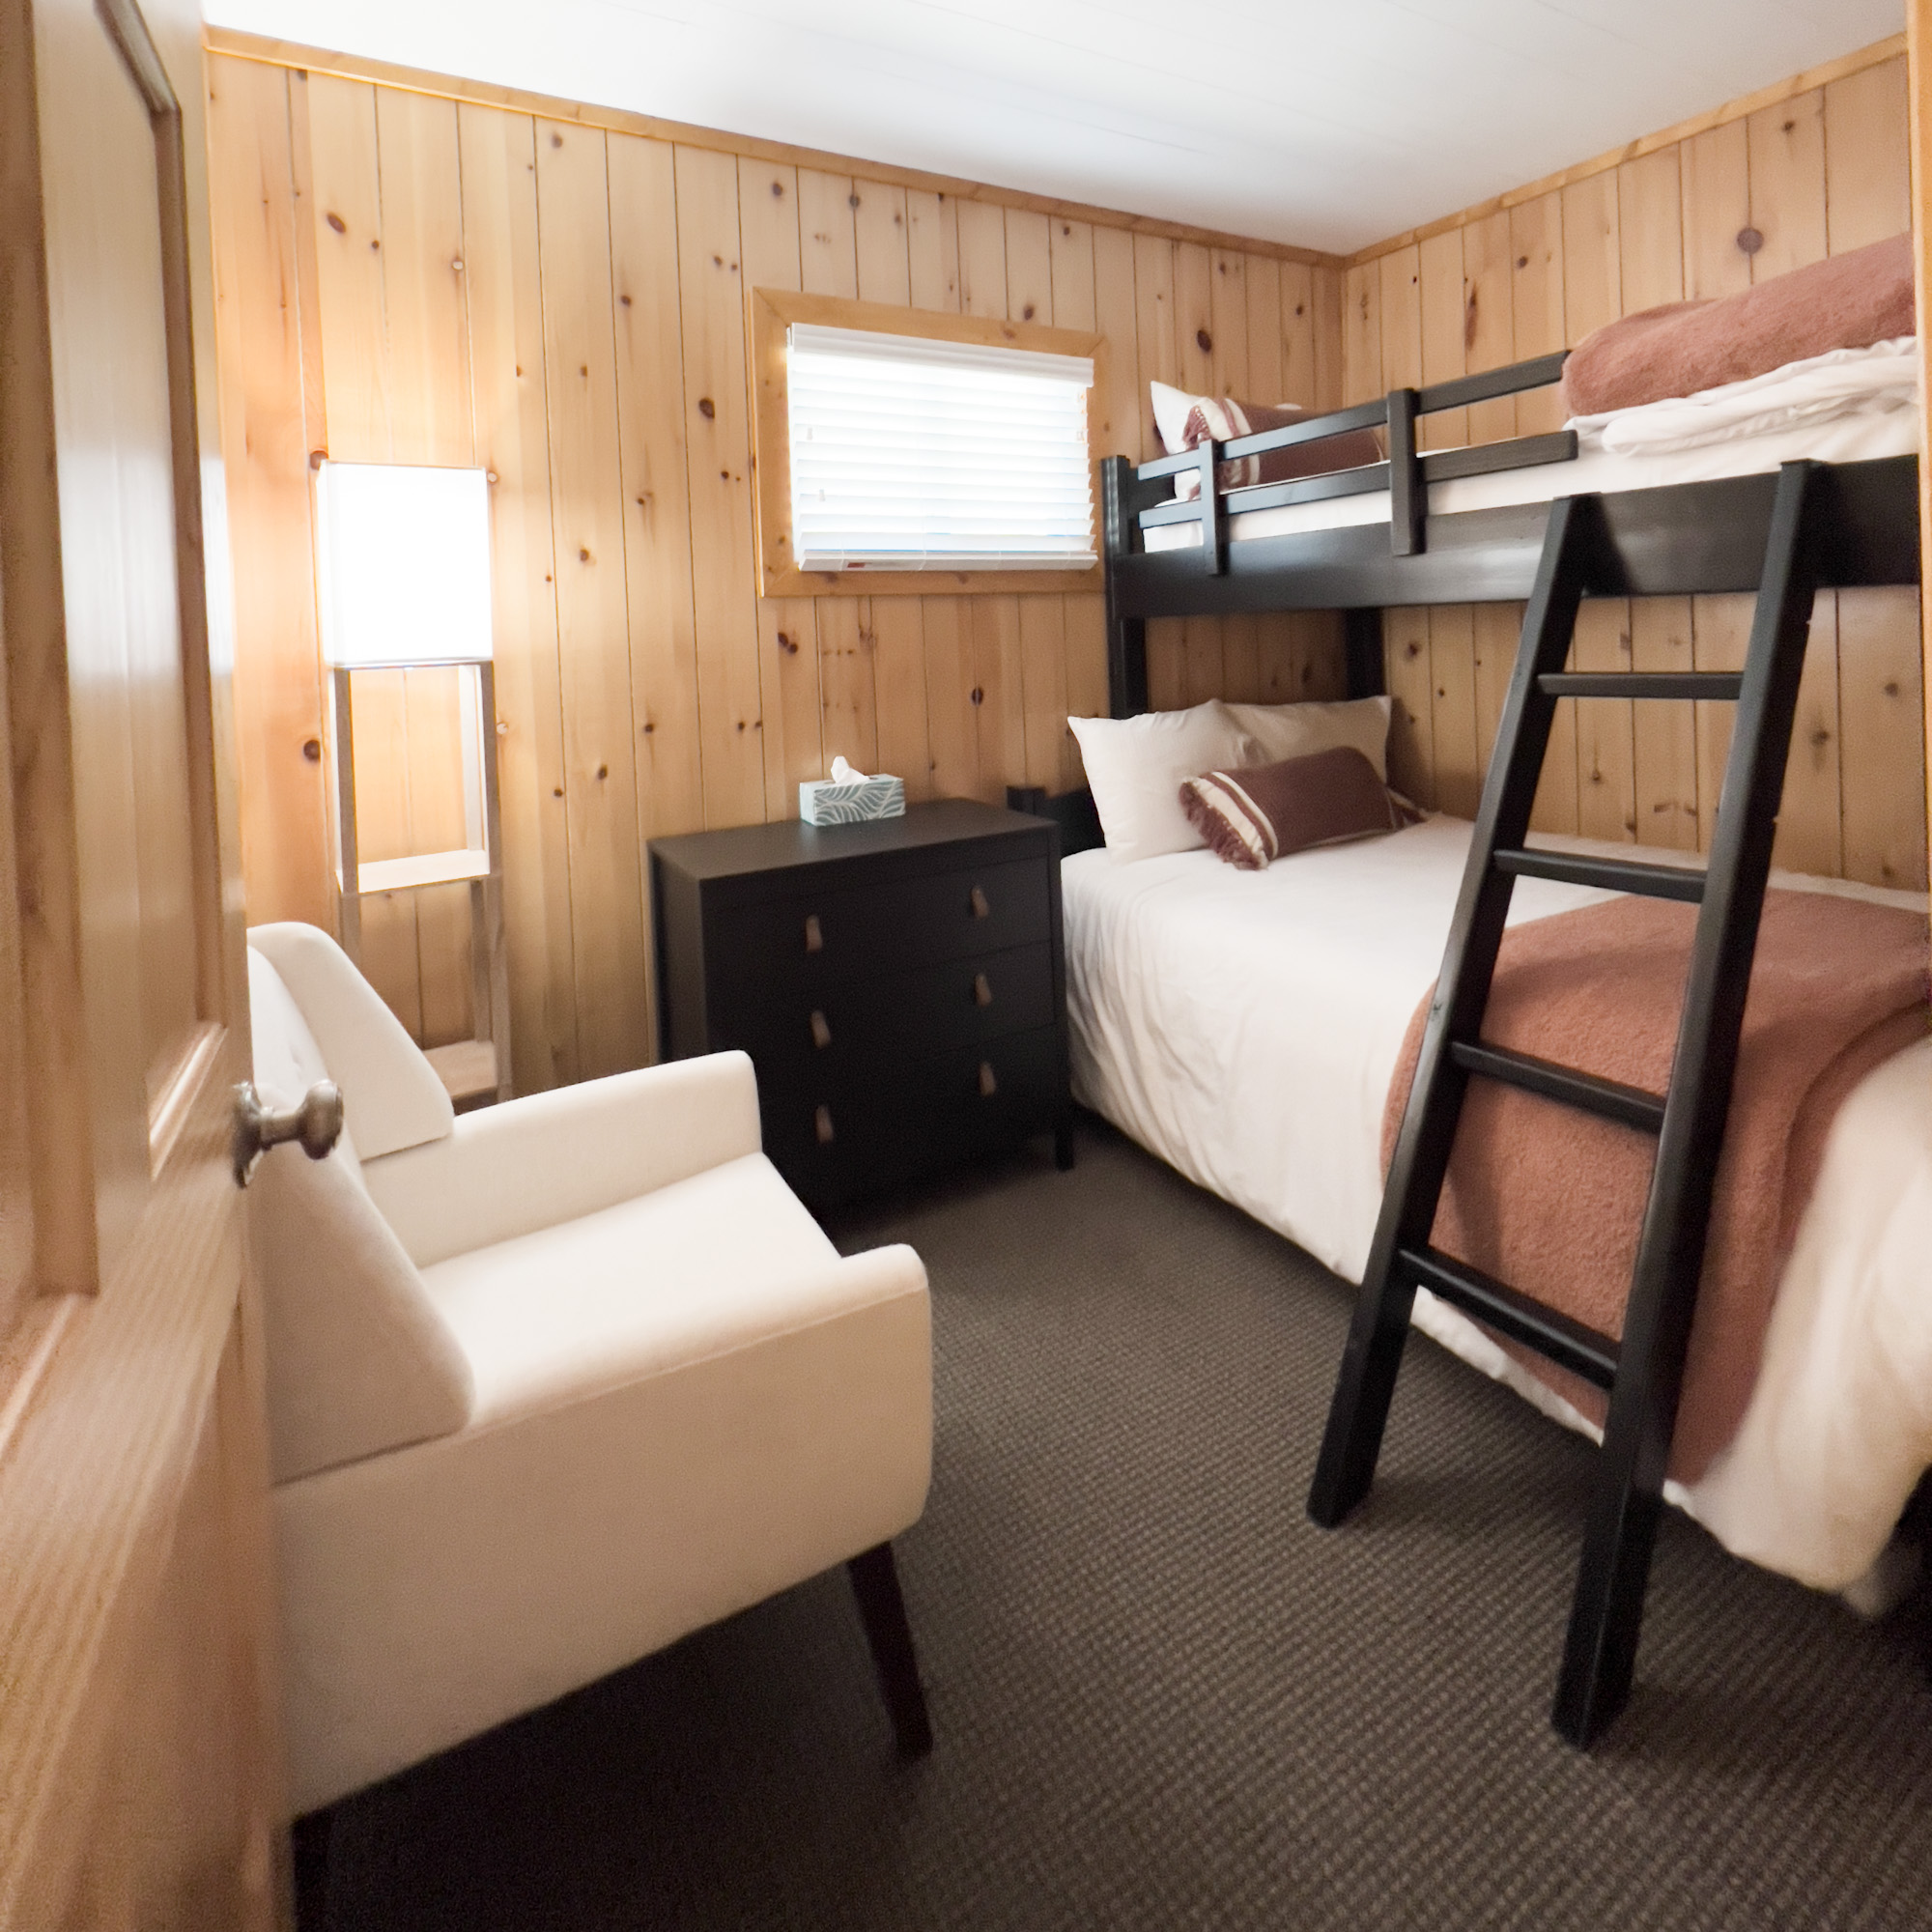 Cabin 3 Bunk Bed - at the Sleeping Bear Resort